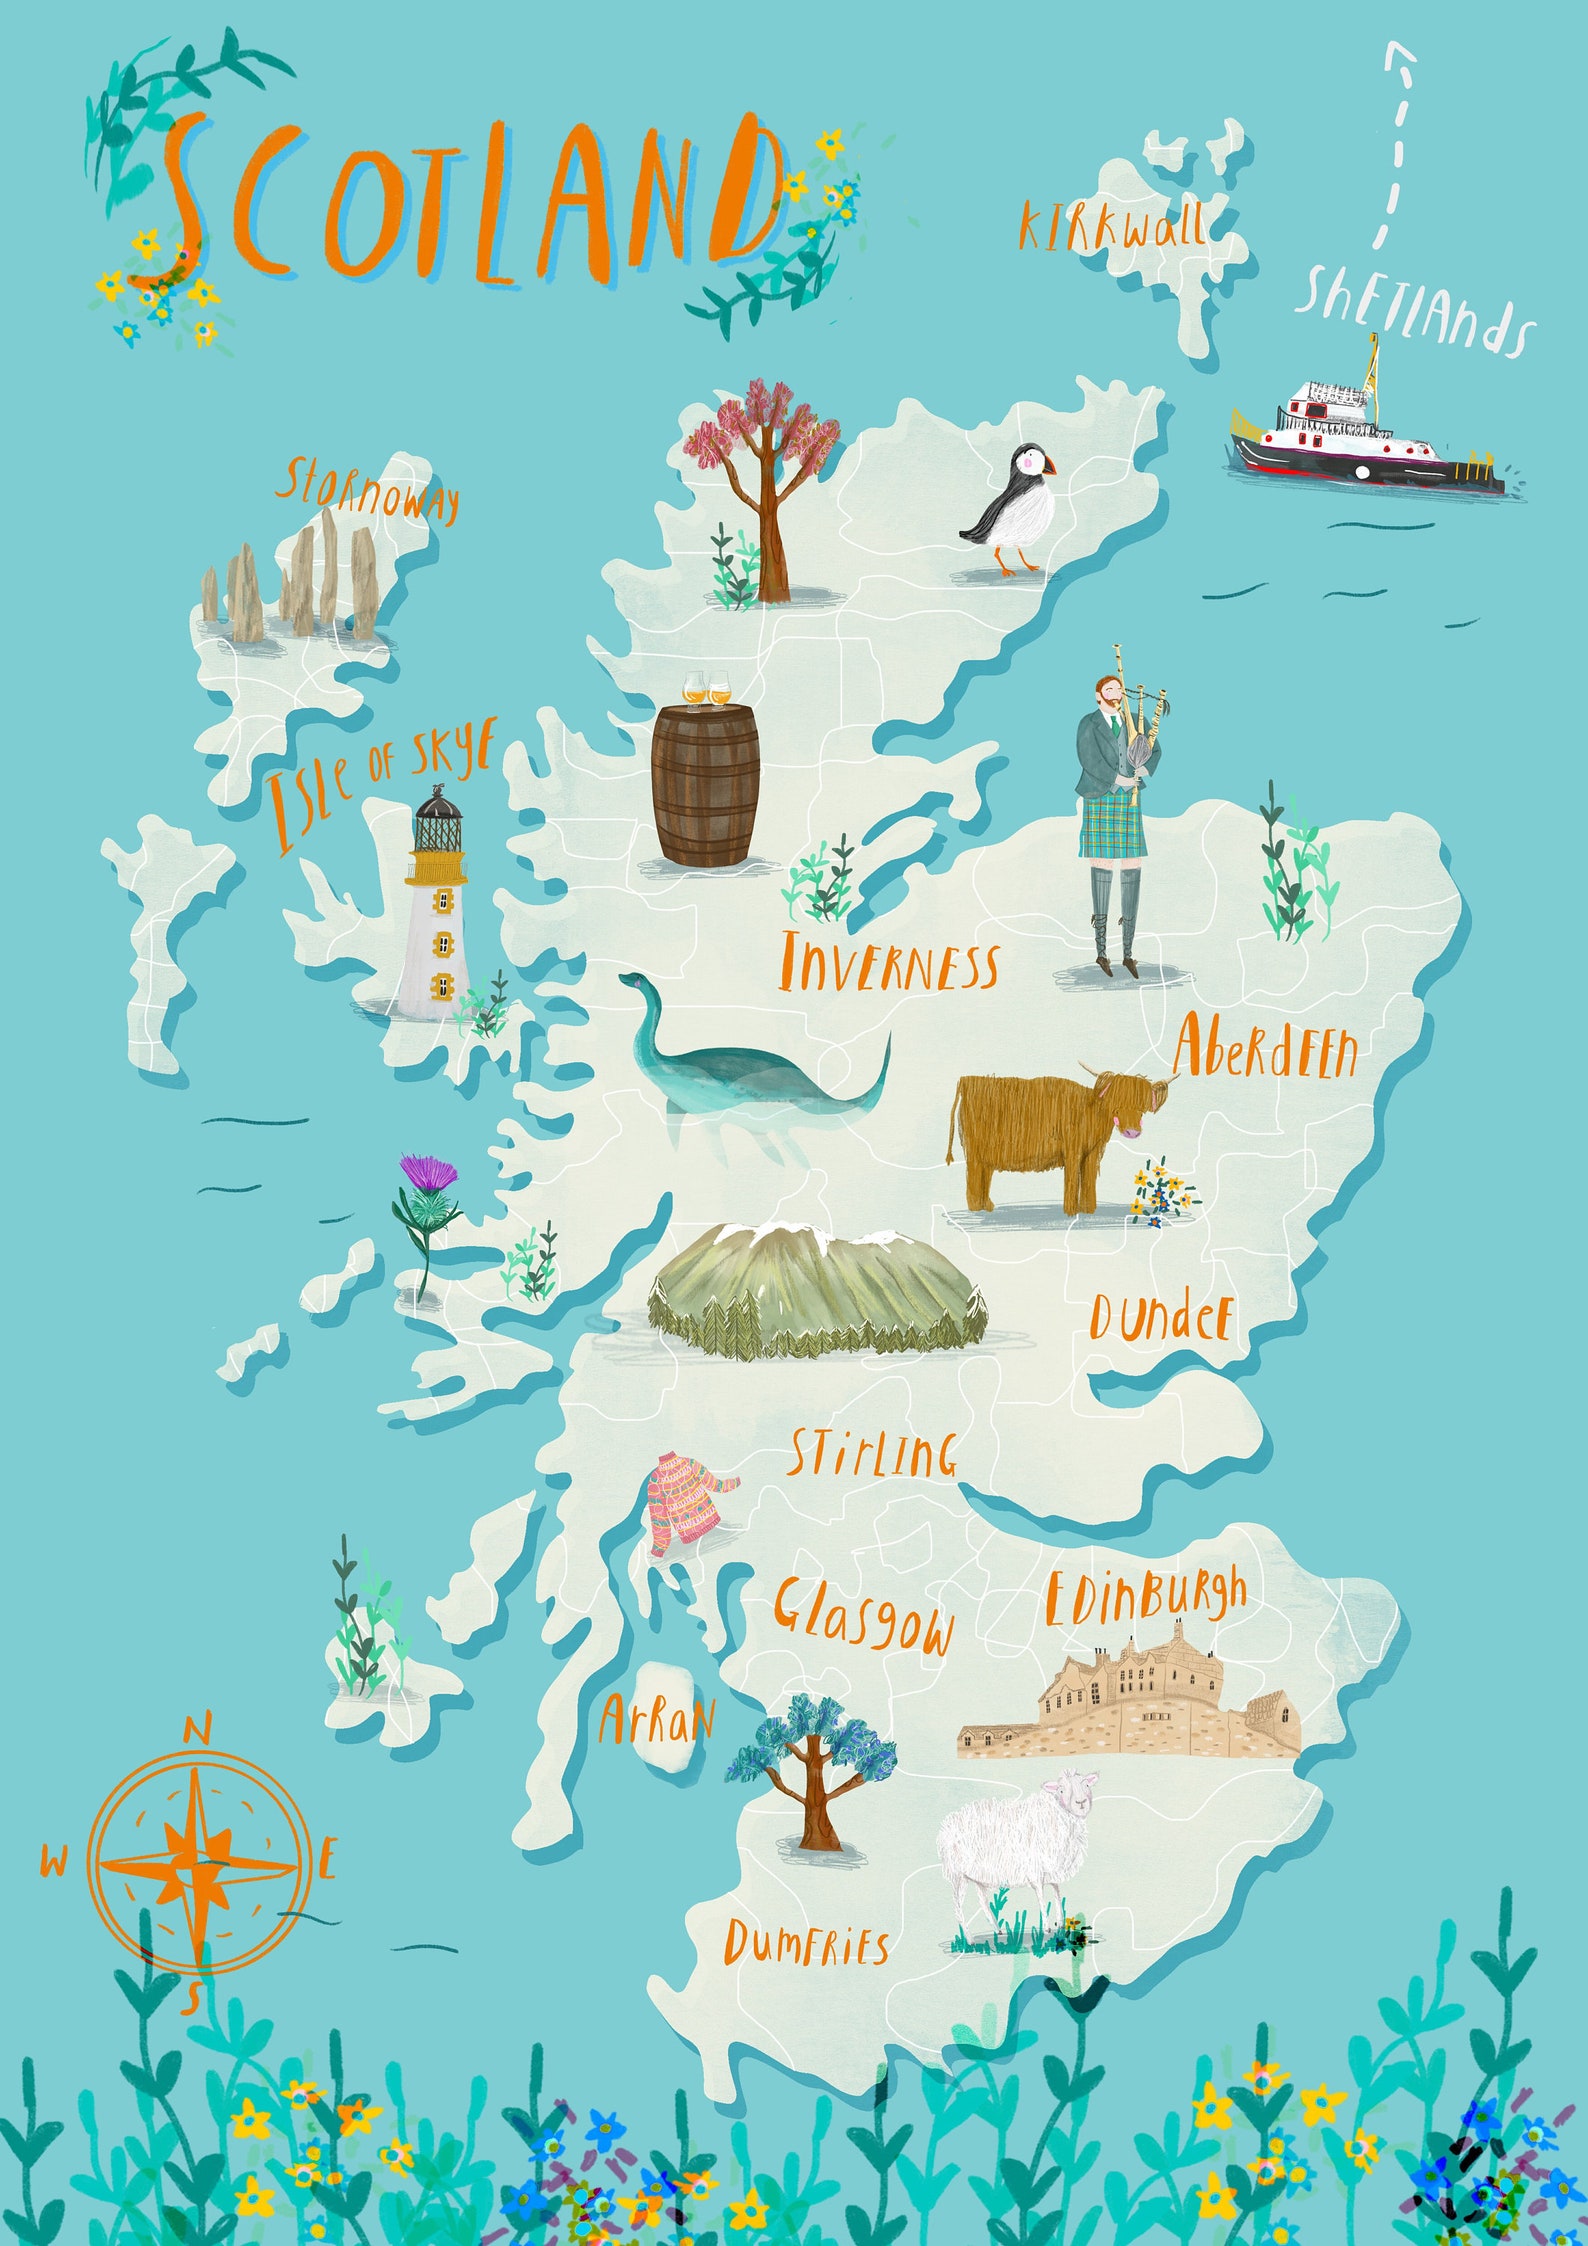 Map of Scotland A5 Print | Etsy